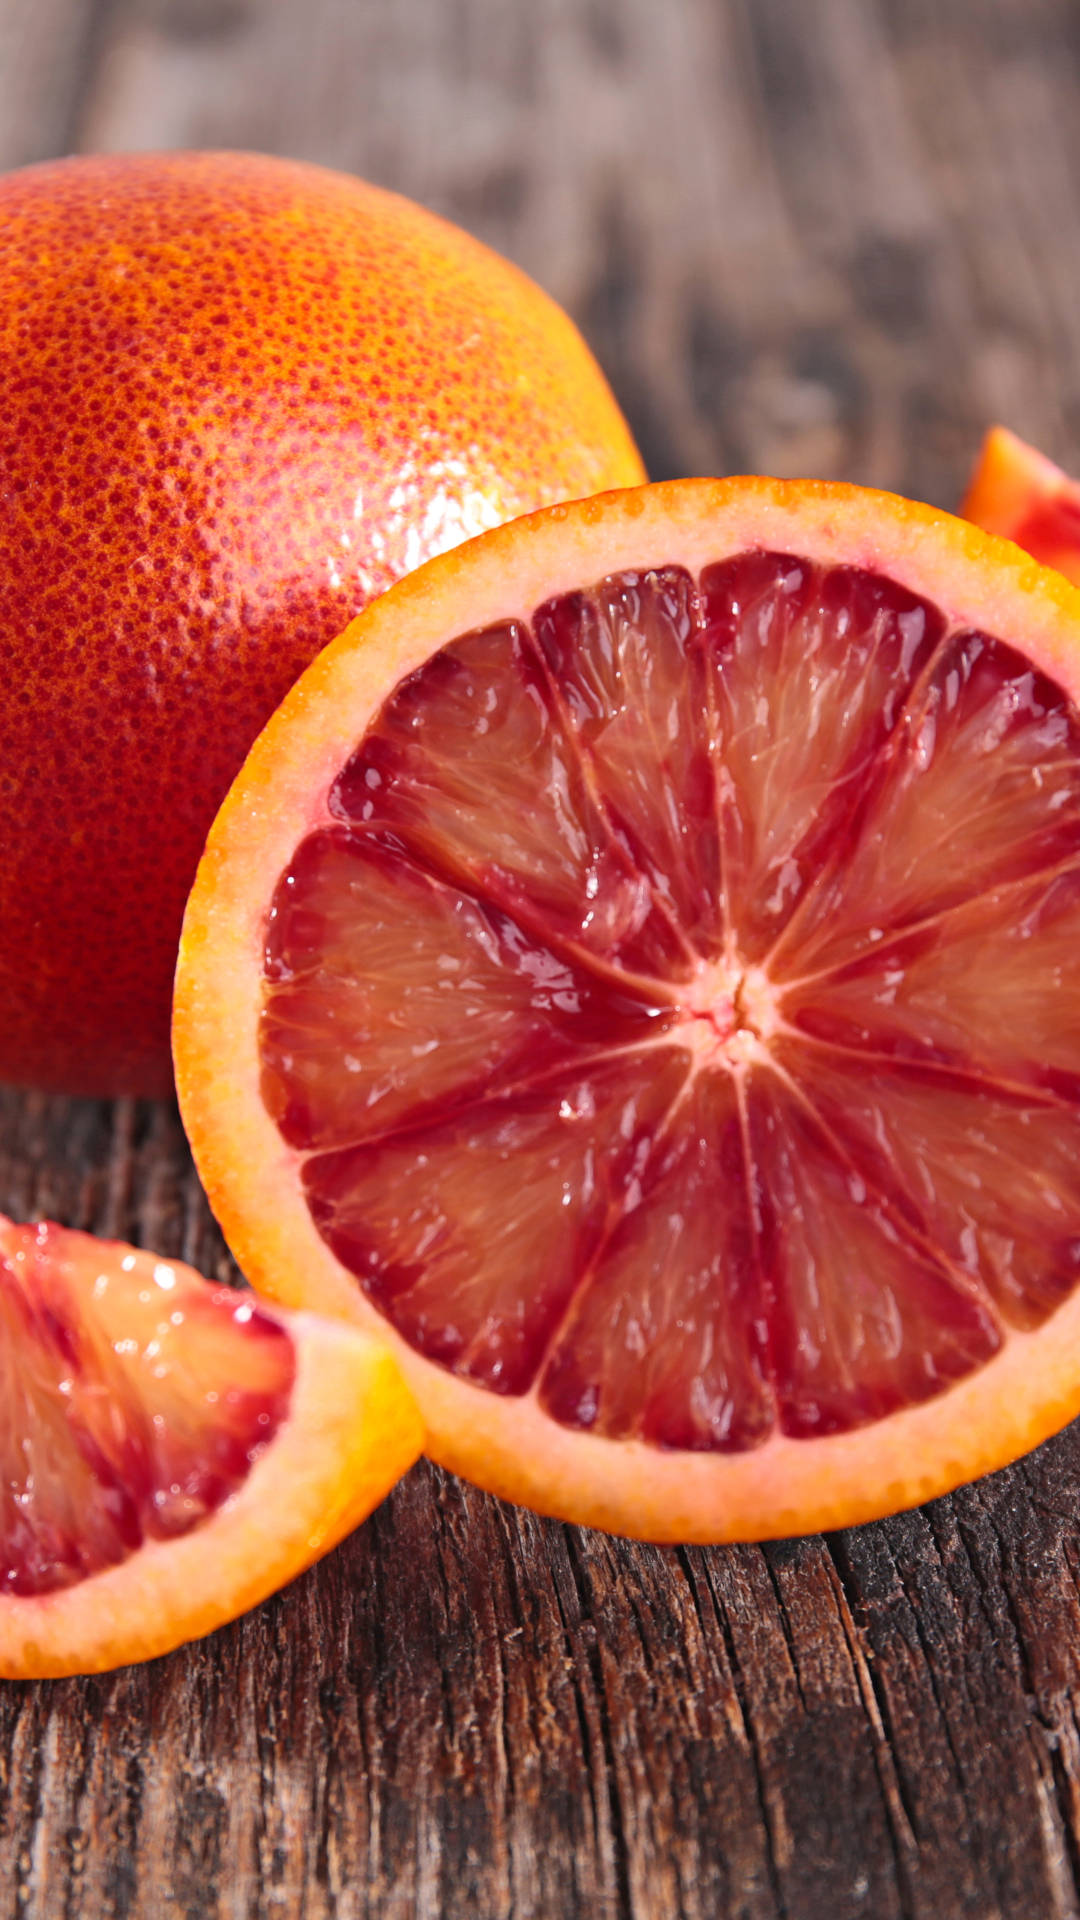 Vibrant Blood Orange Citrus Fruit with a Retro Aesthetic Wallpaper